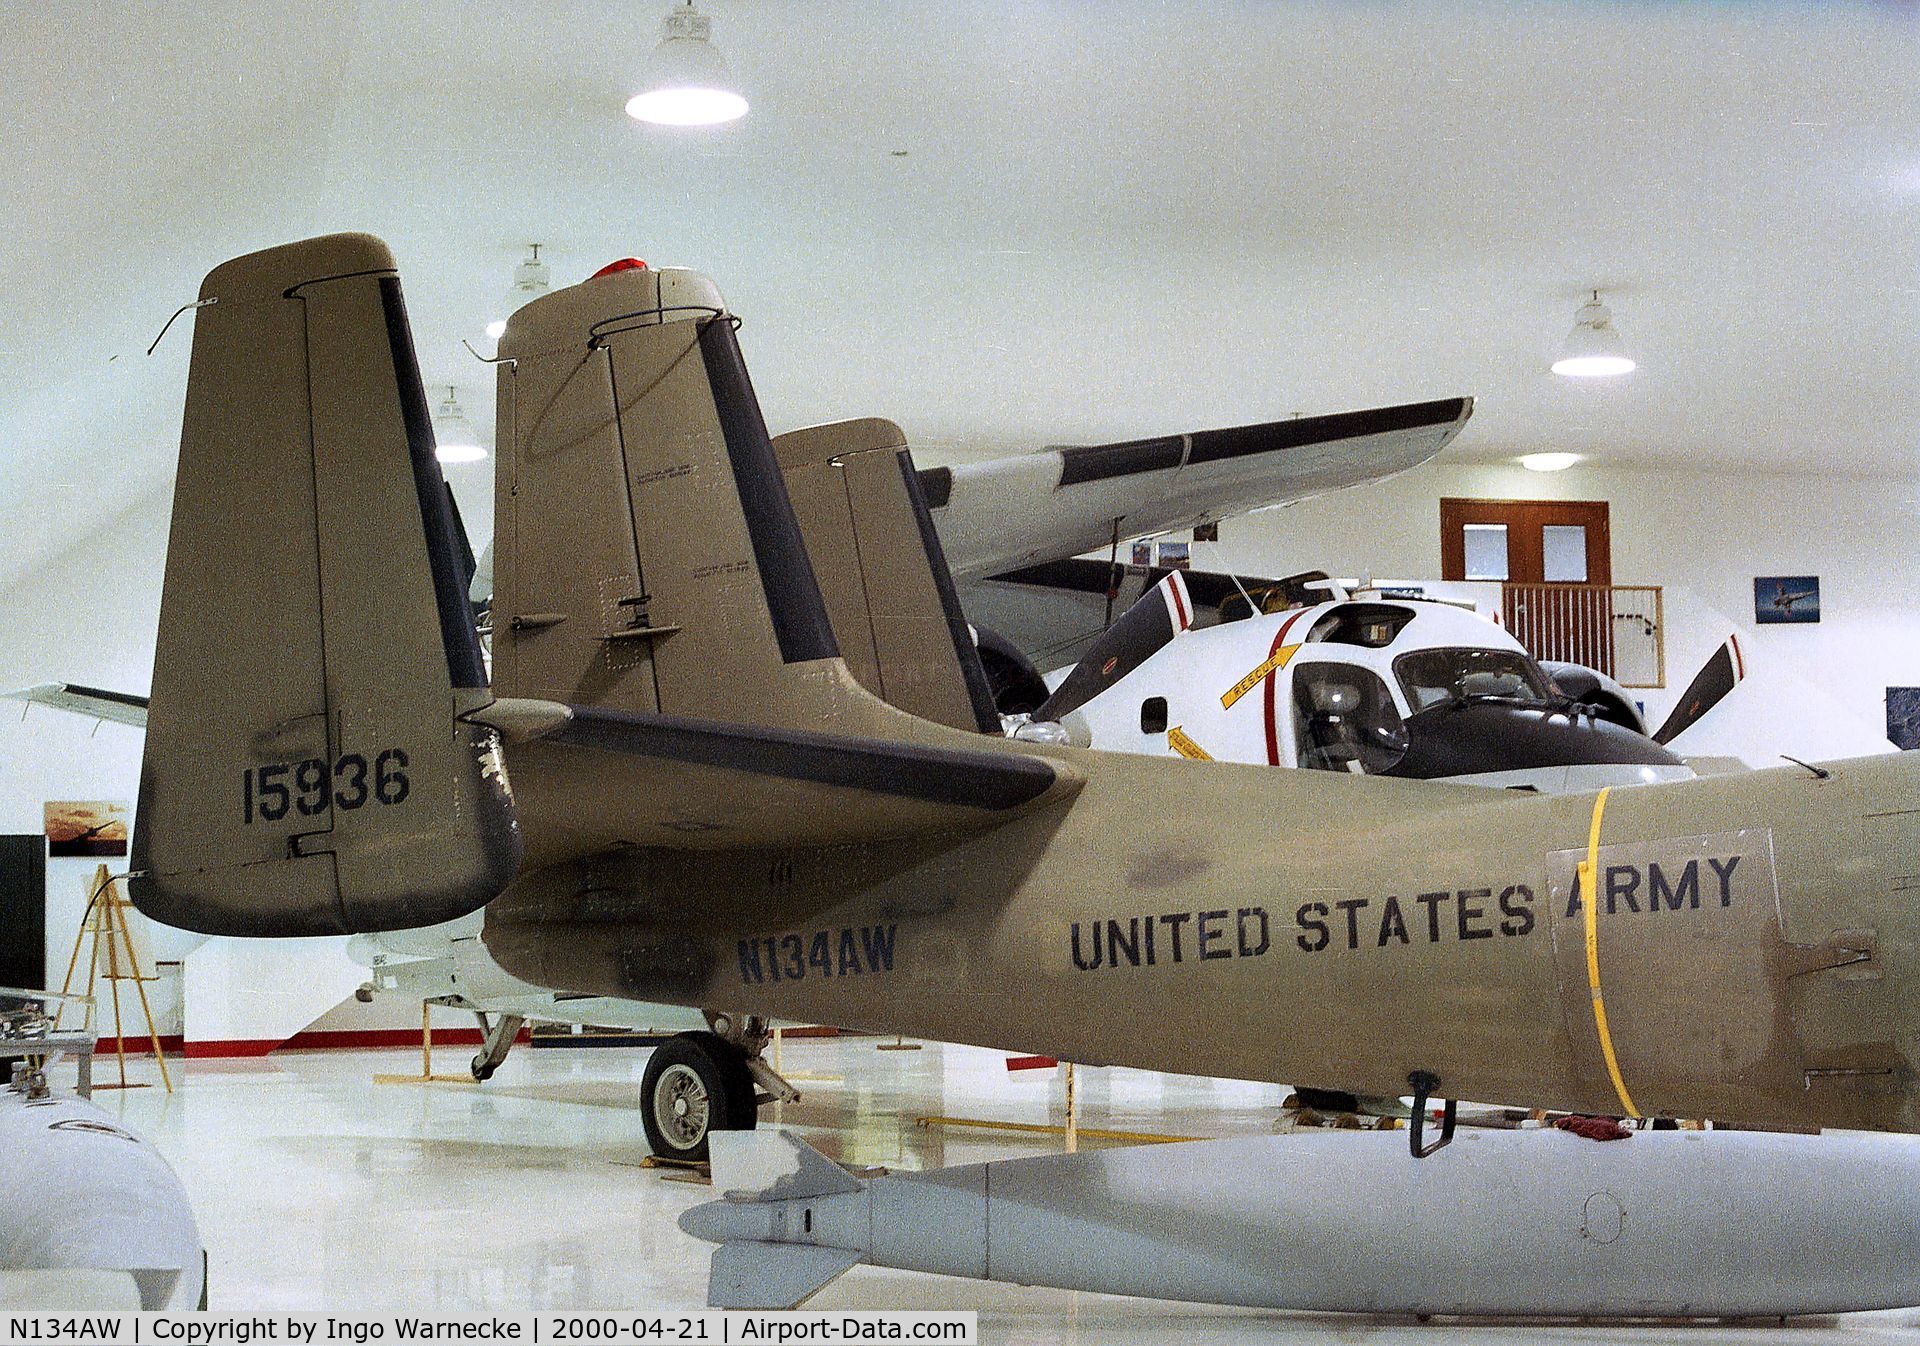 N134AW, 1969 Grumman OV-1C Mohawk C/N 140C, Grumman OV-1C Mohawk at the American Wings Air Museum, Blaine MN